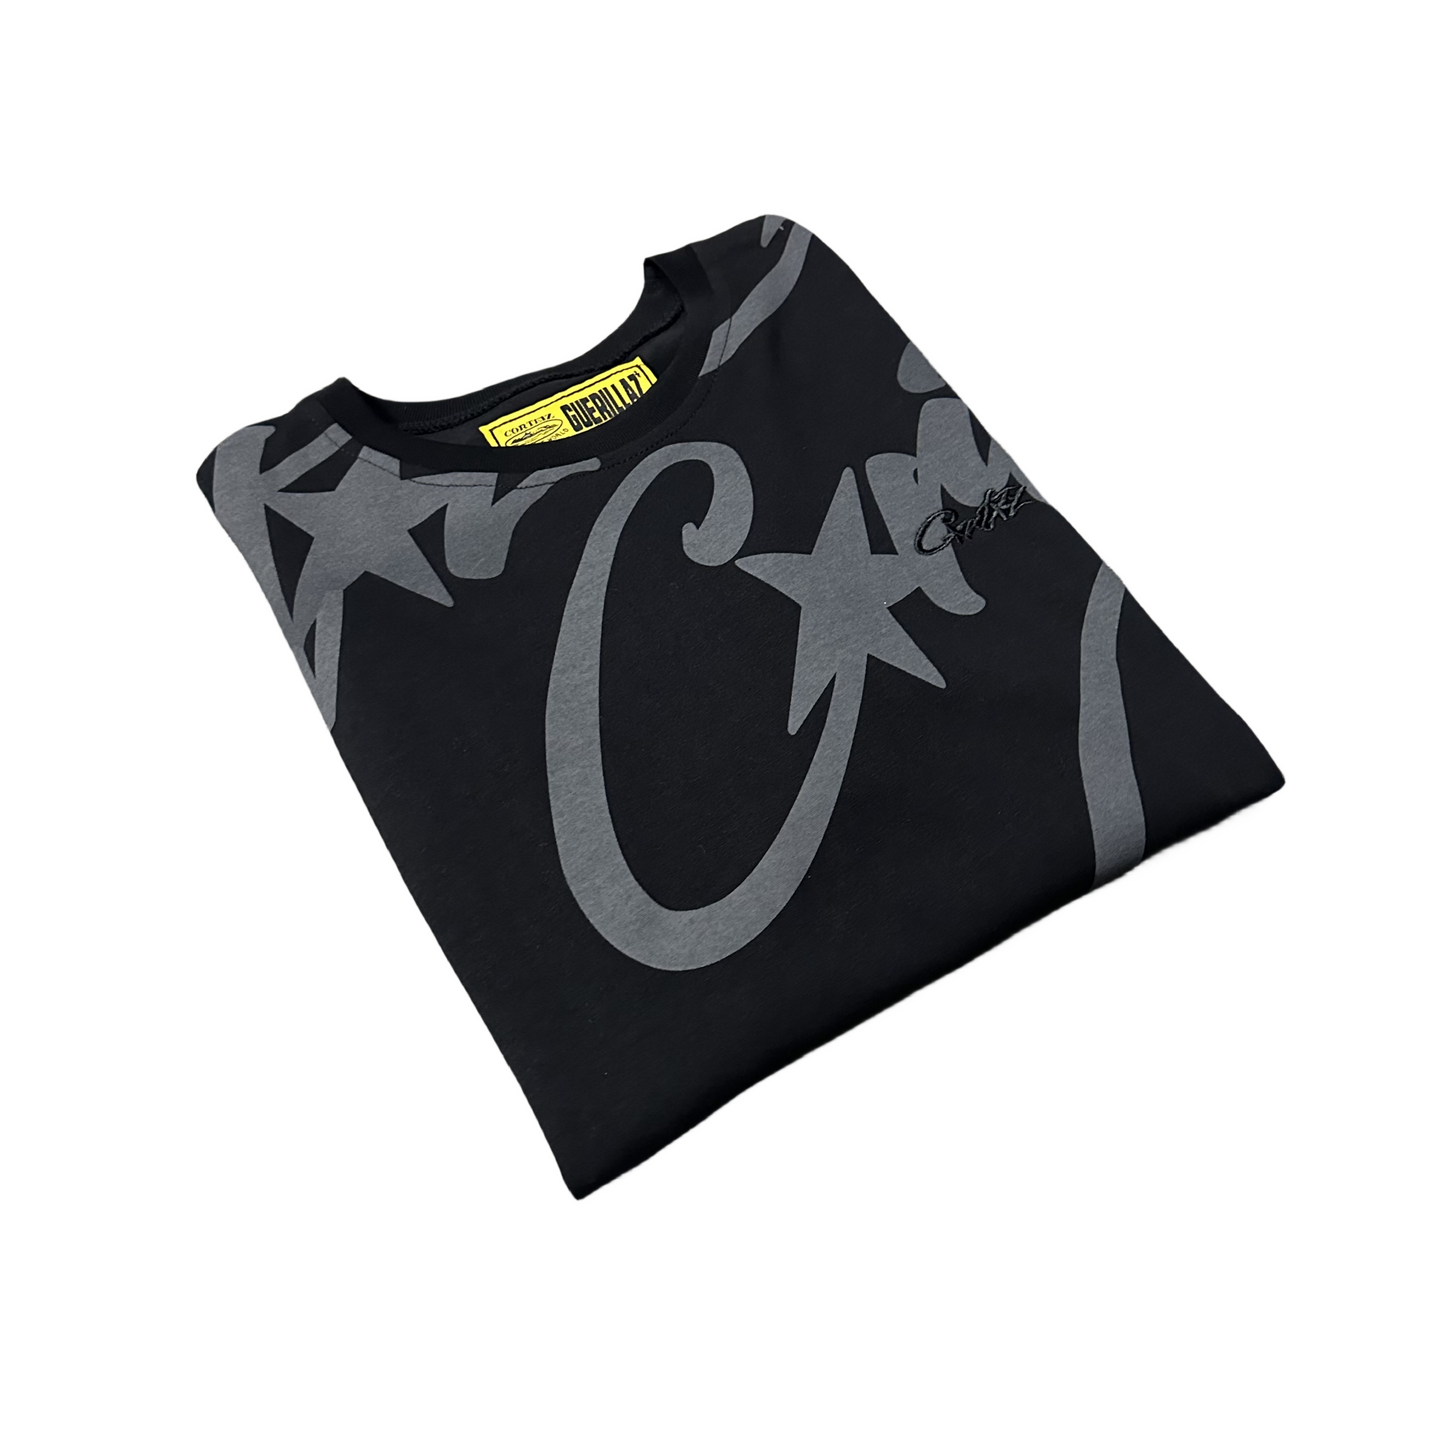 Corteiz Allstarz Allover T-Shirt Short Sleeve Tee - Black